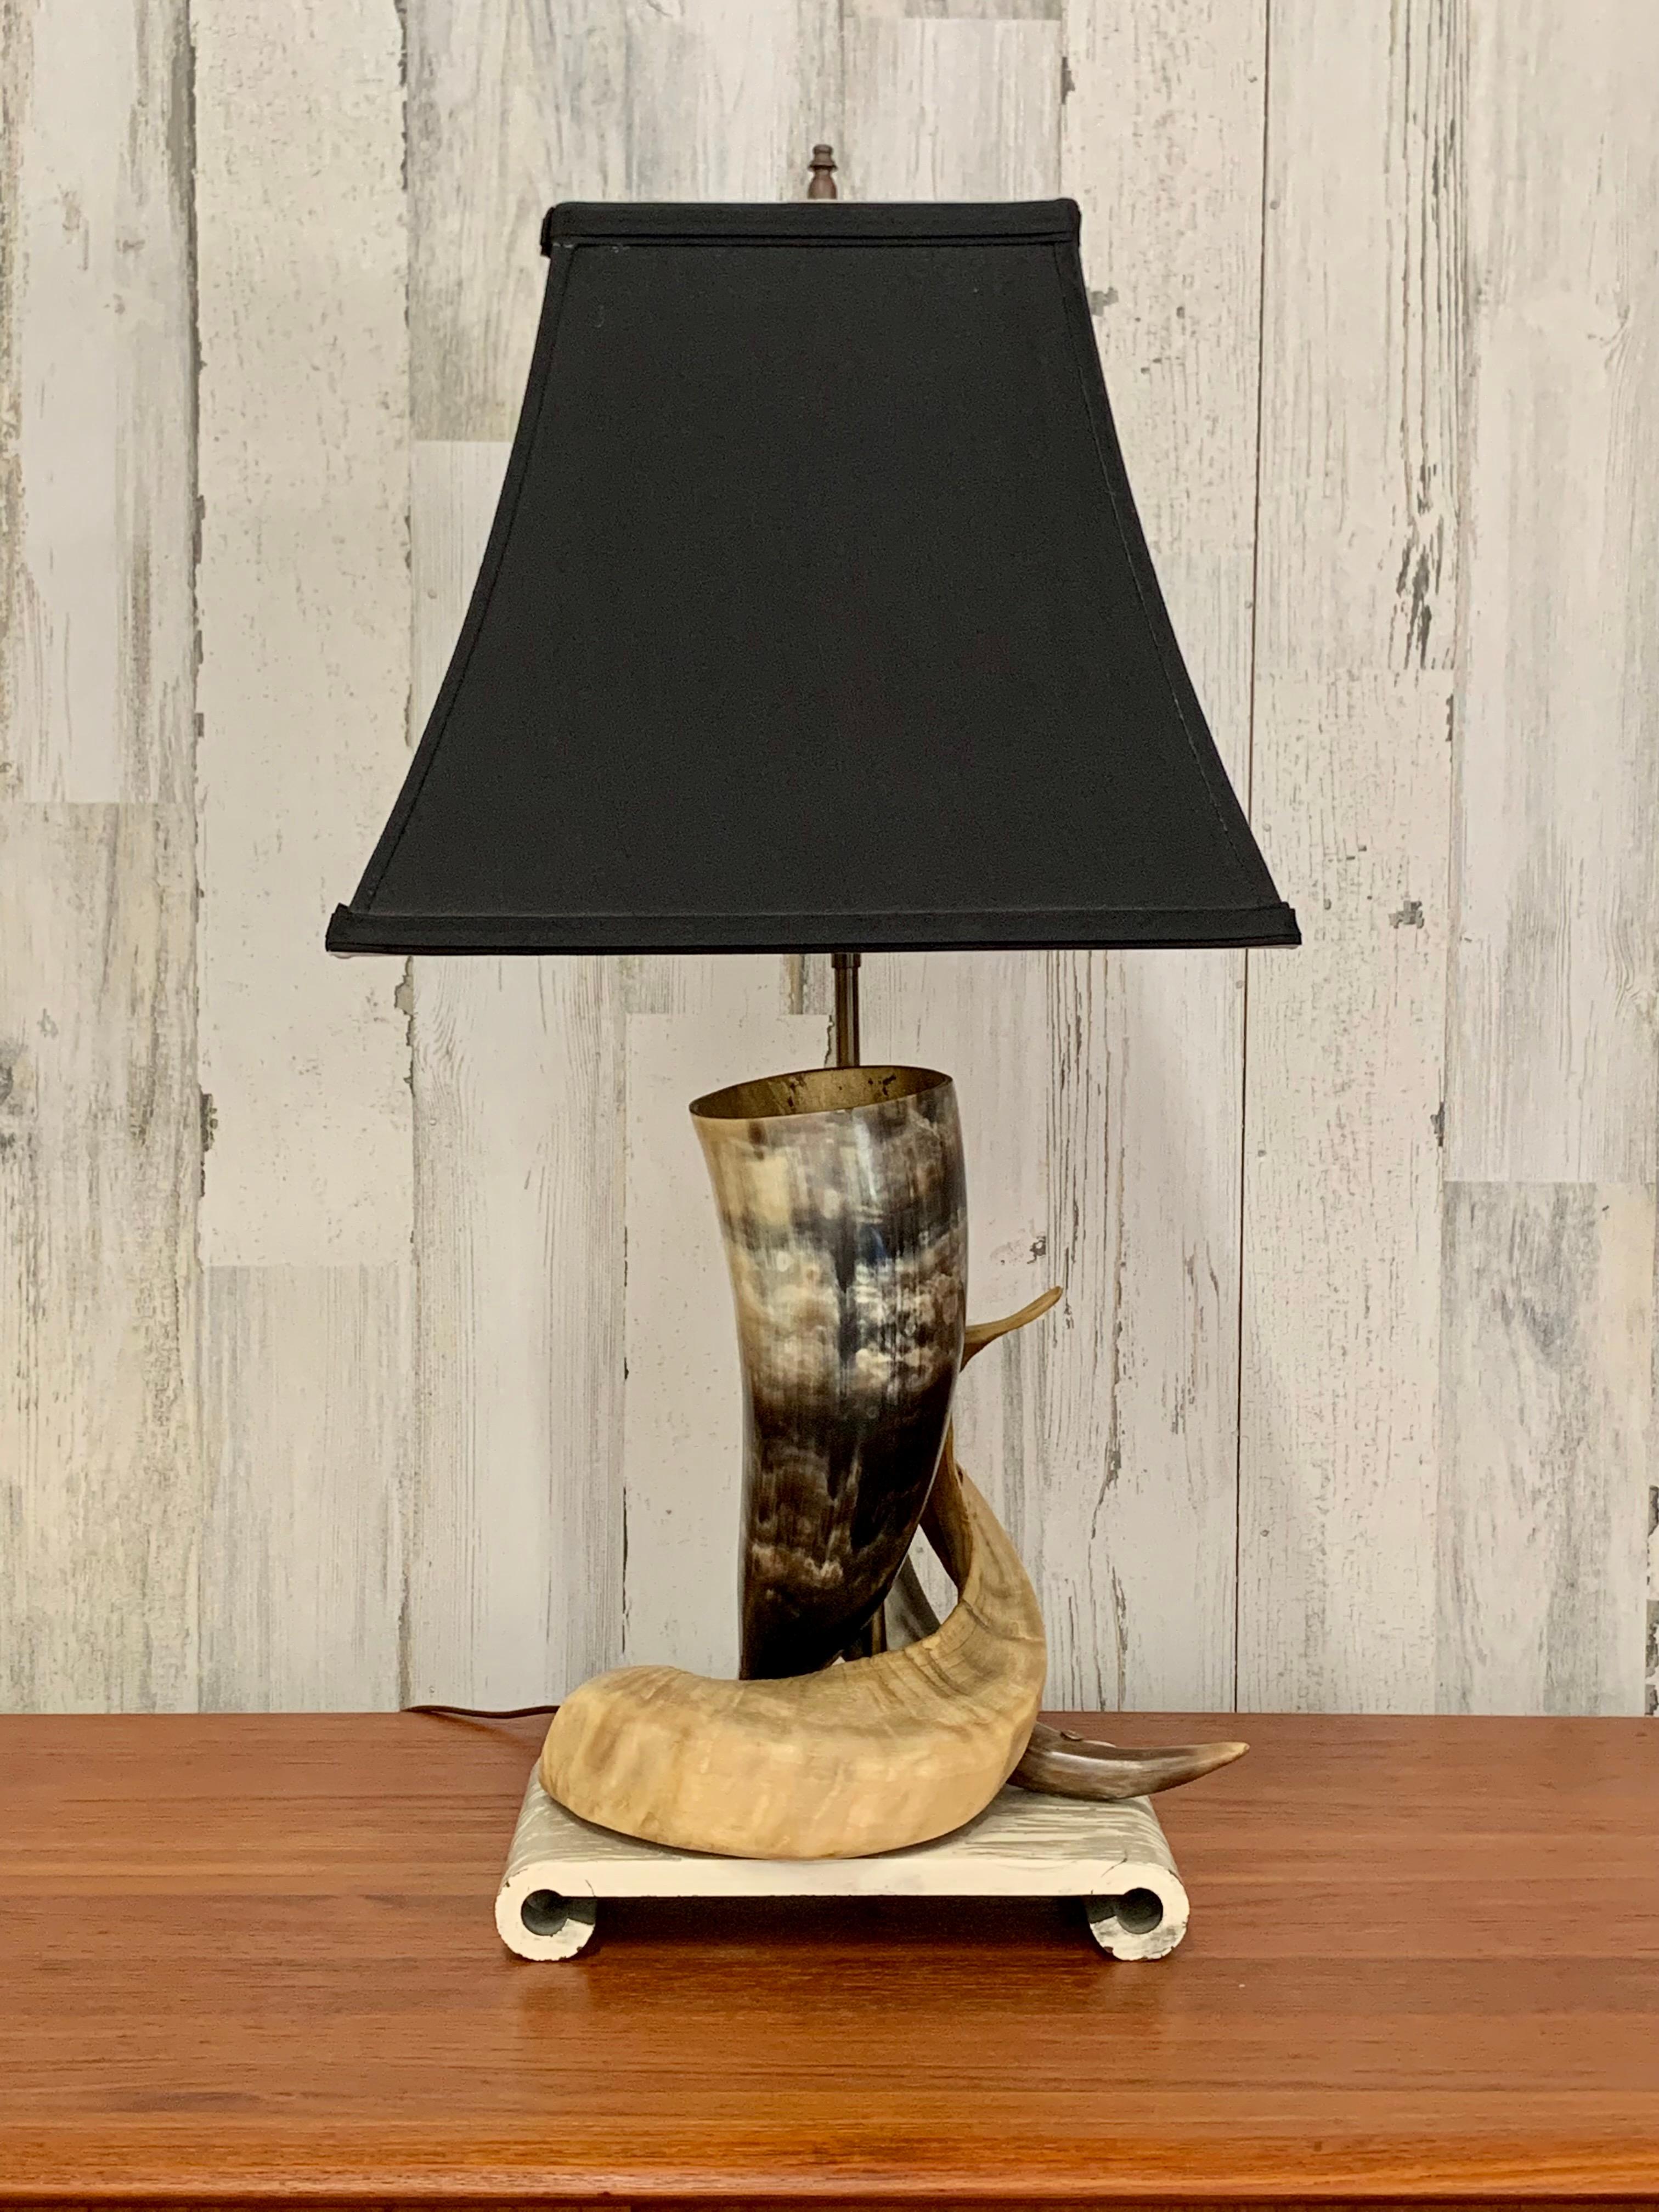 Dekorative Tischlampe aus Horn mit Sockel aus Kunstmarmor.